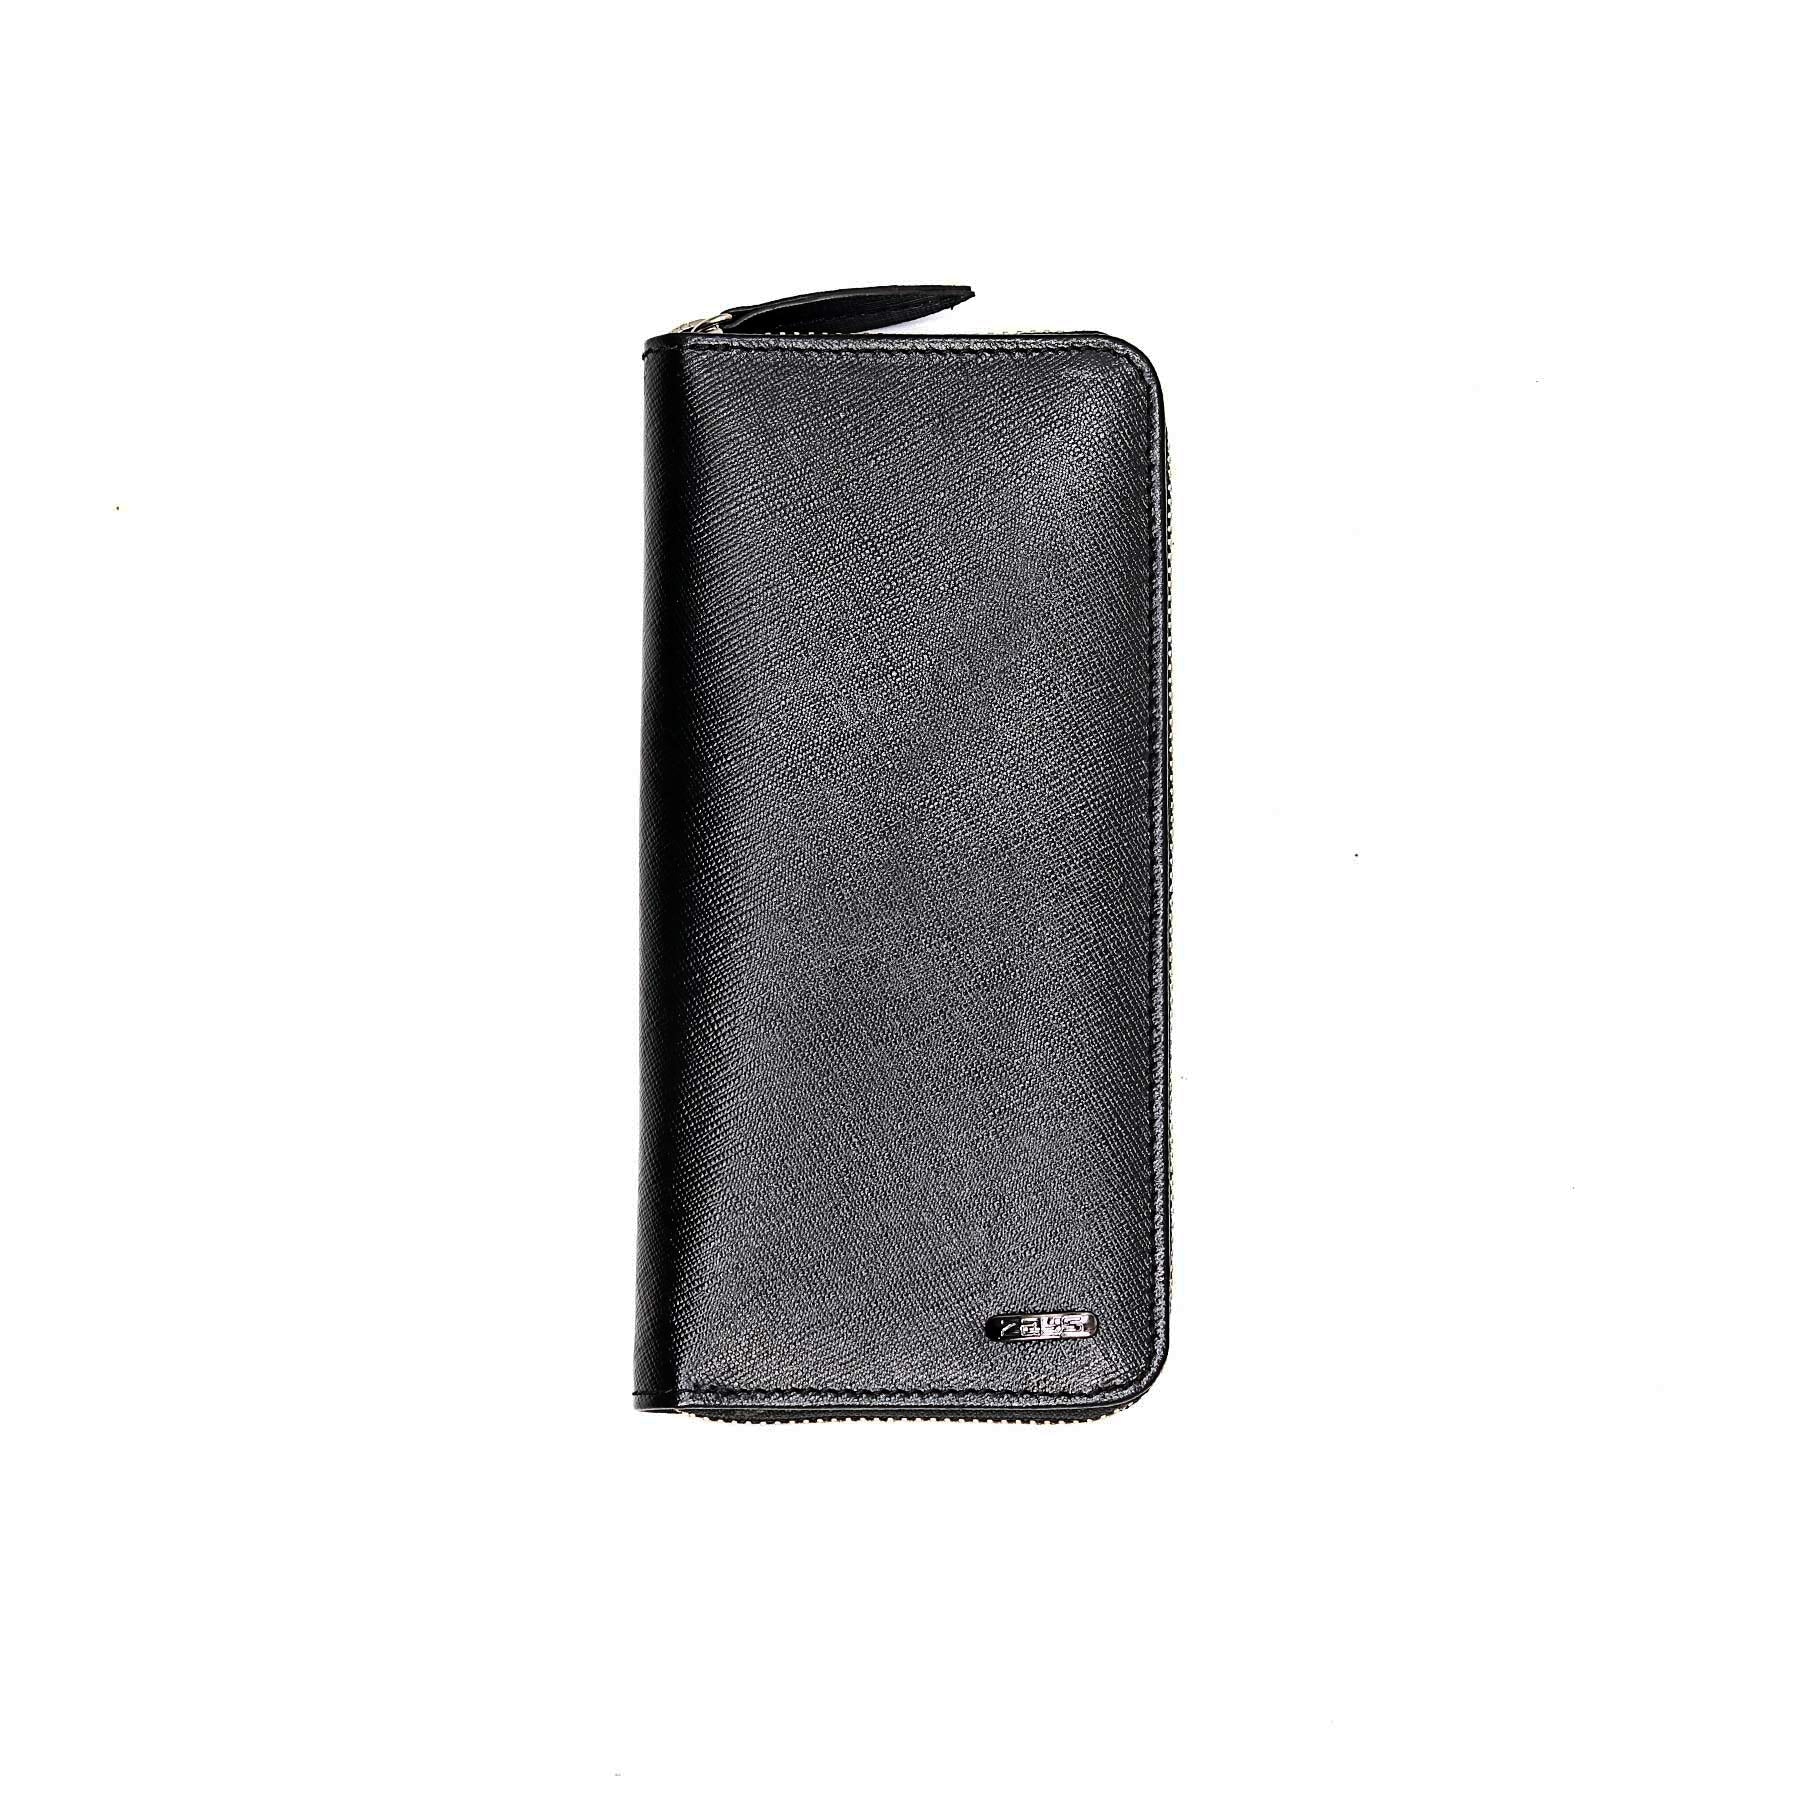 Zays Premium Leather Multifunctional Long Mobile Wallet for Unisex - Black - WL31